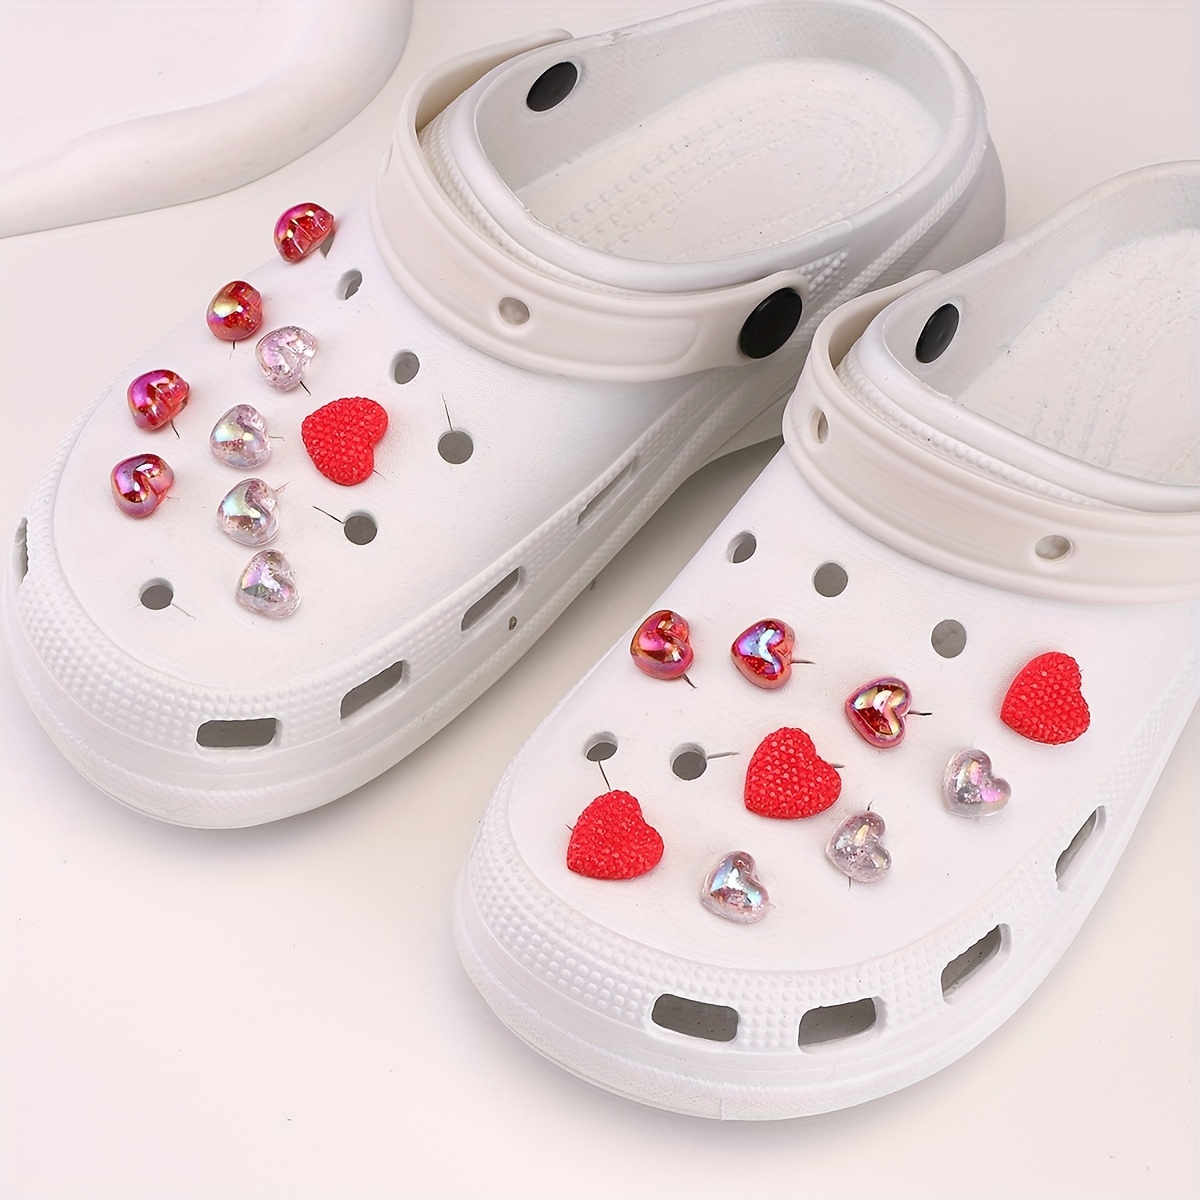 Pink Valentine Croc Charms 17PCS Shoes Charm for Crocs Cute 